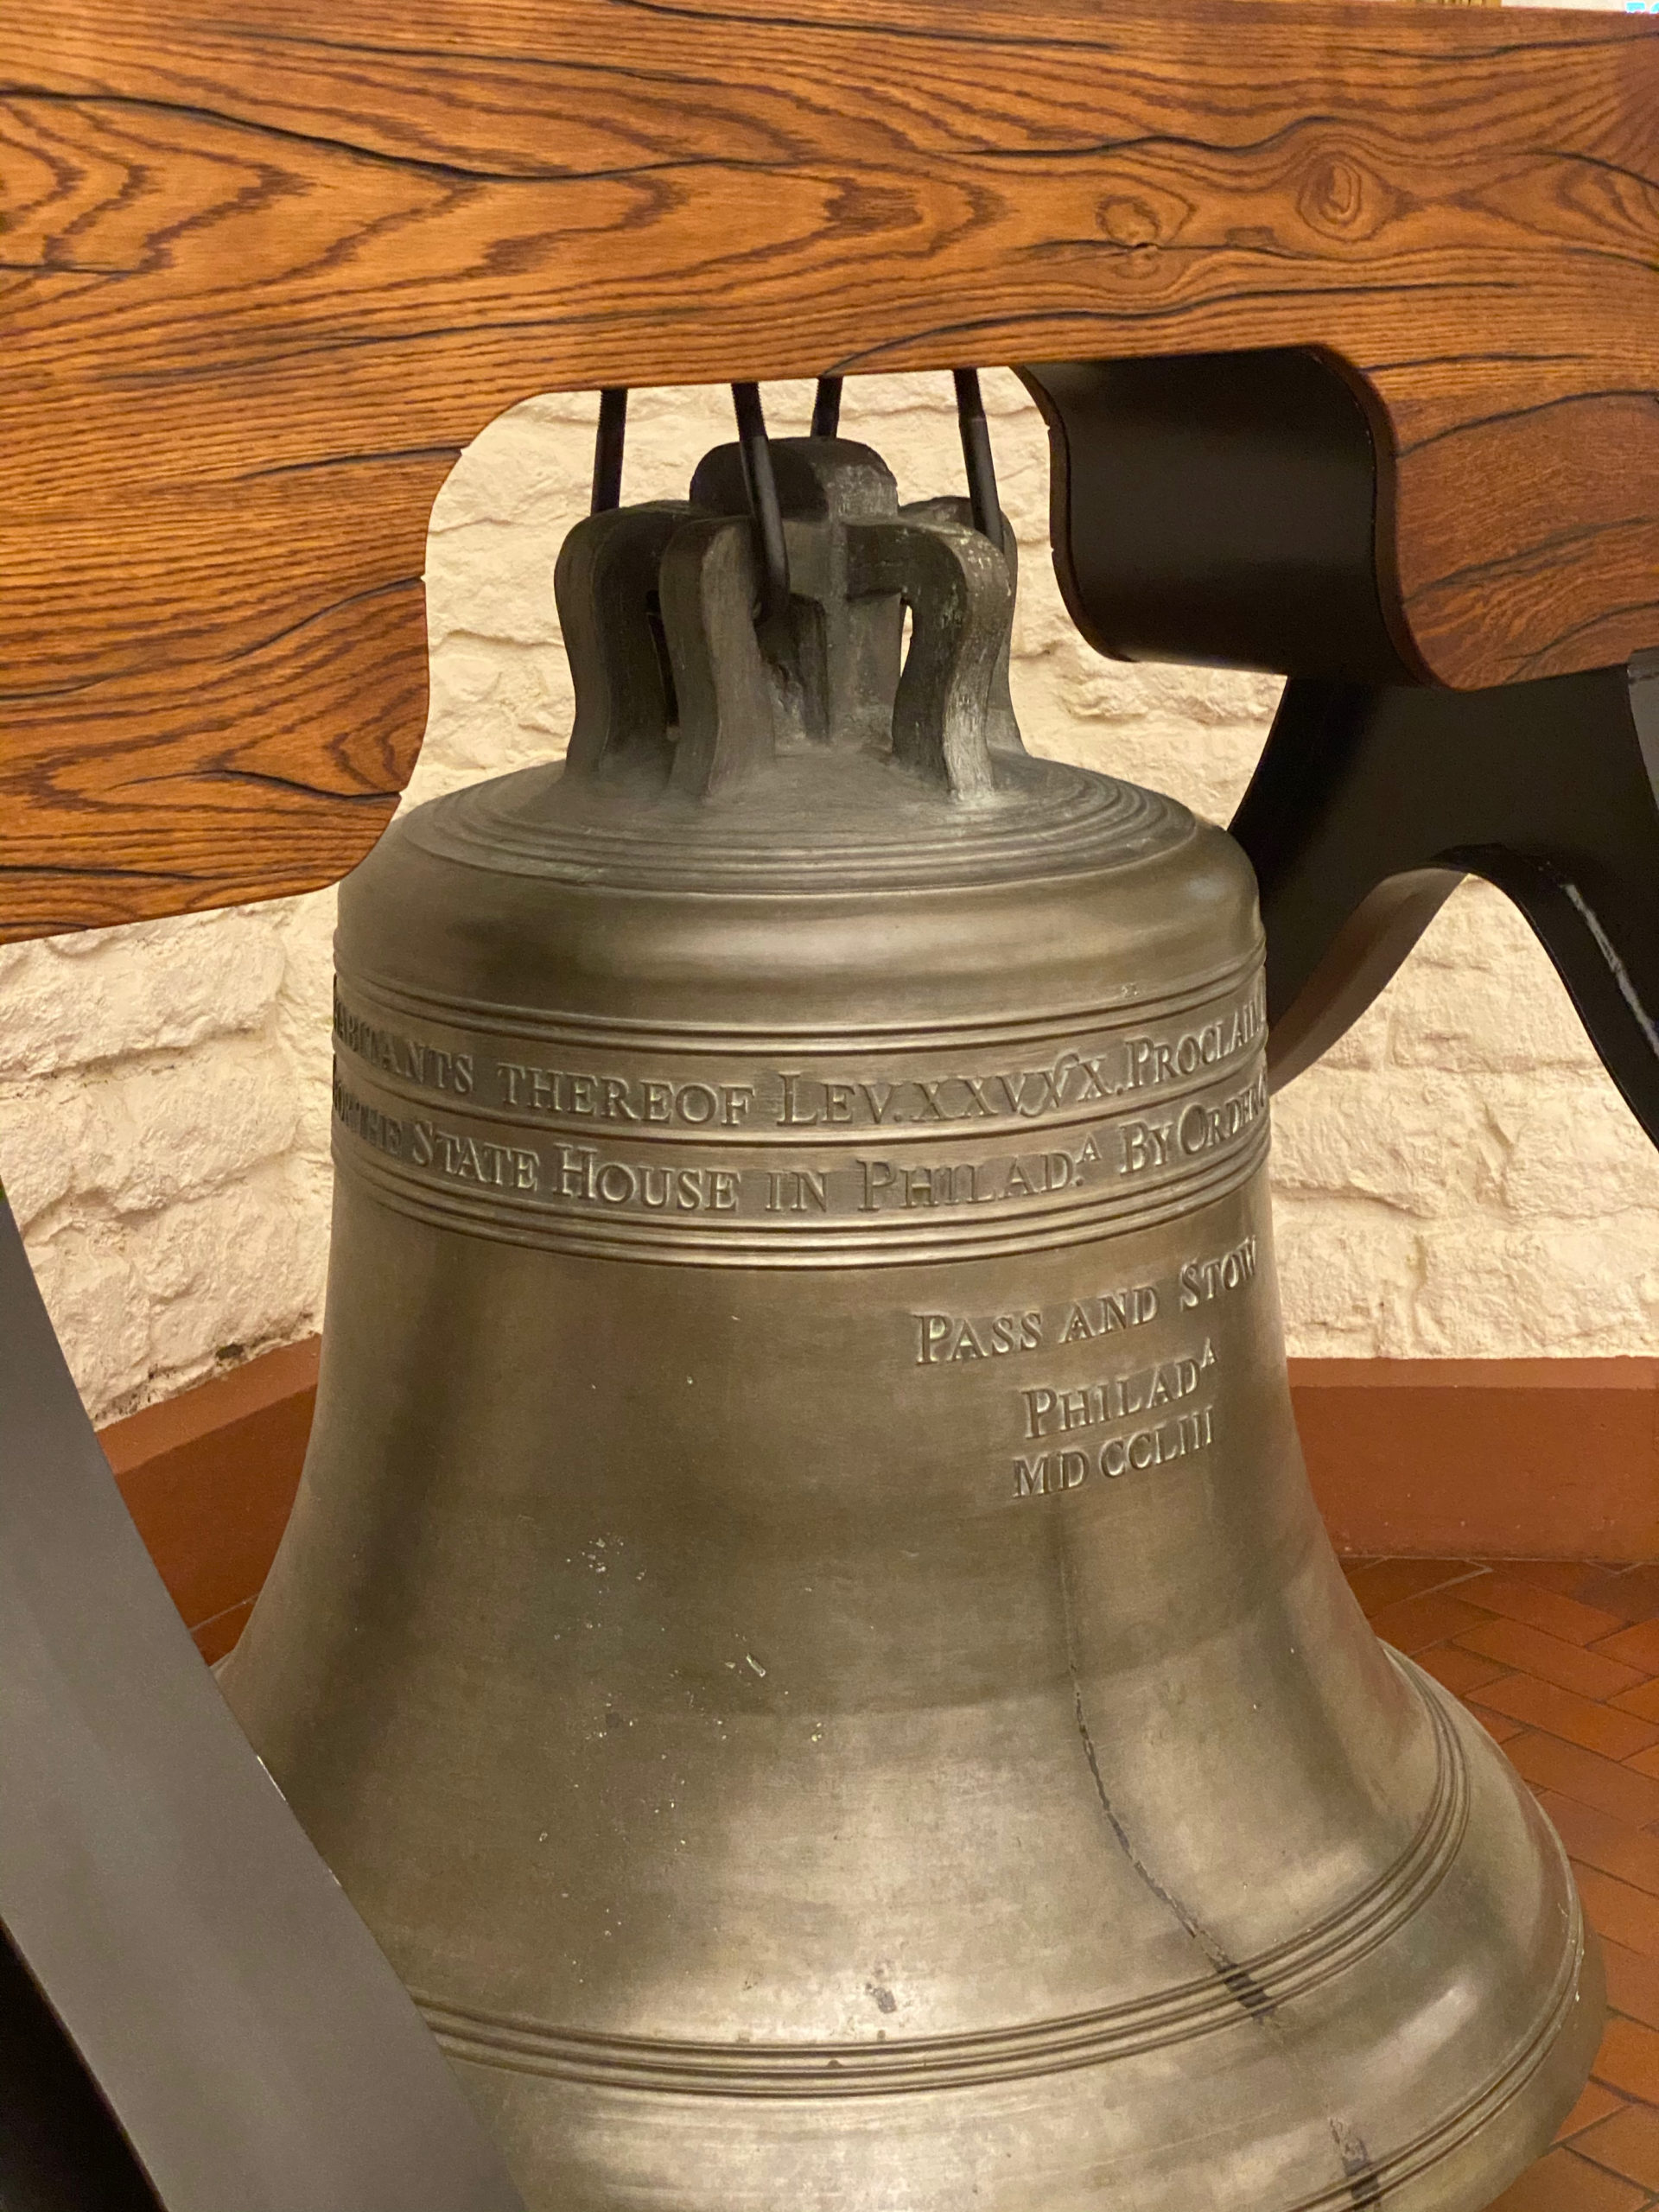 The 57 U.S. Treasury Liberty Bell replicas